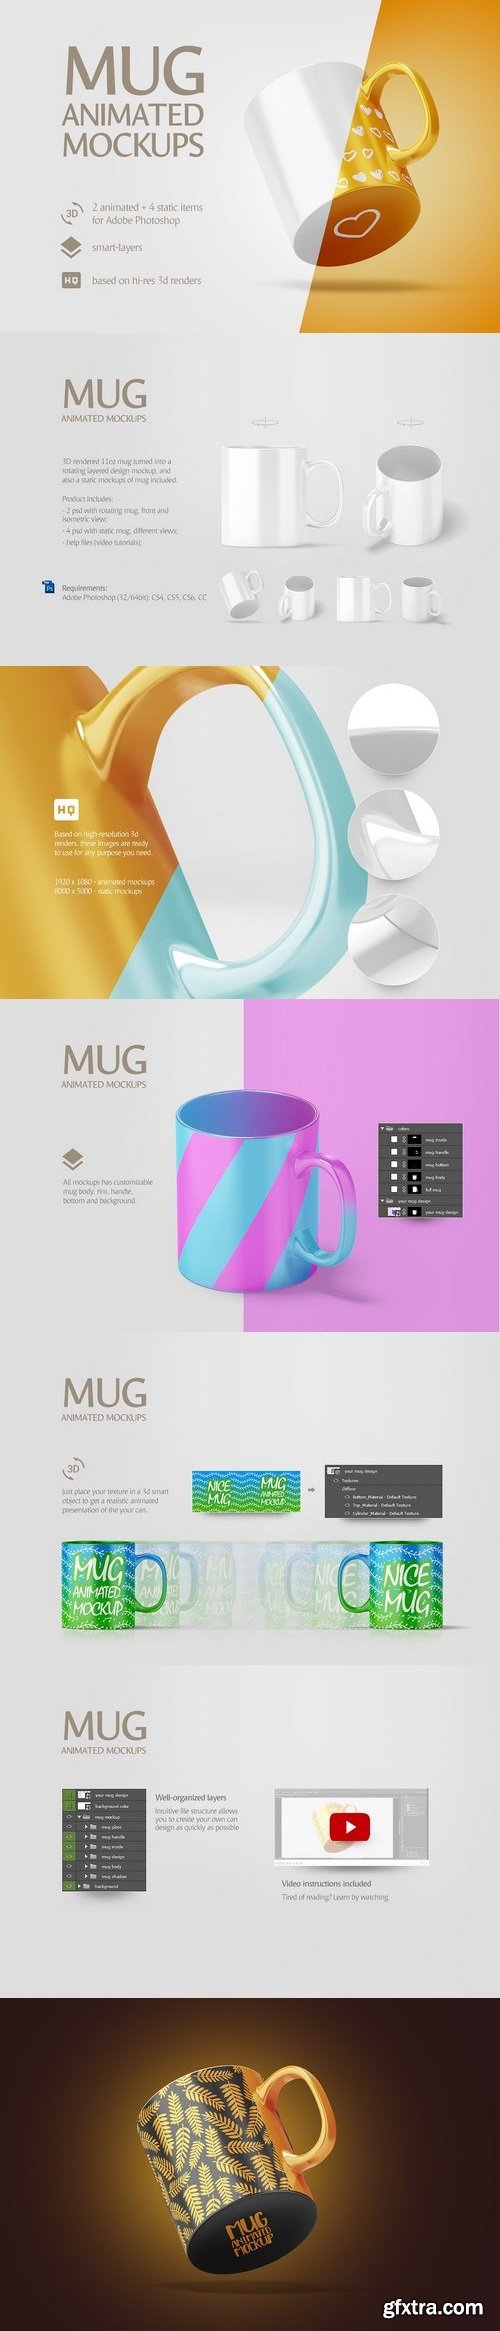 CM - Mug Animated Mockup 1378442